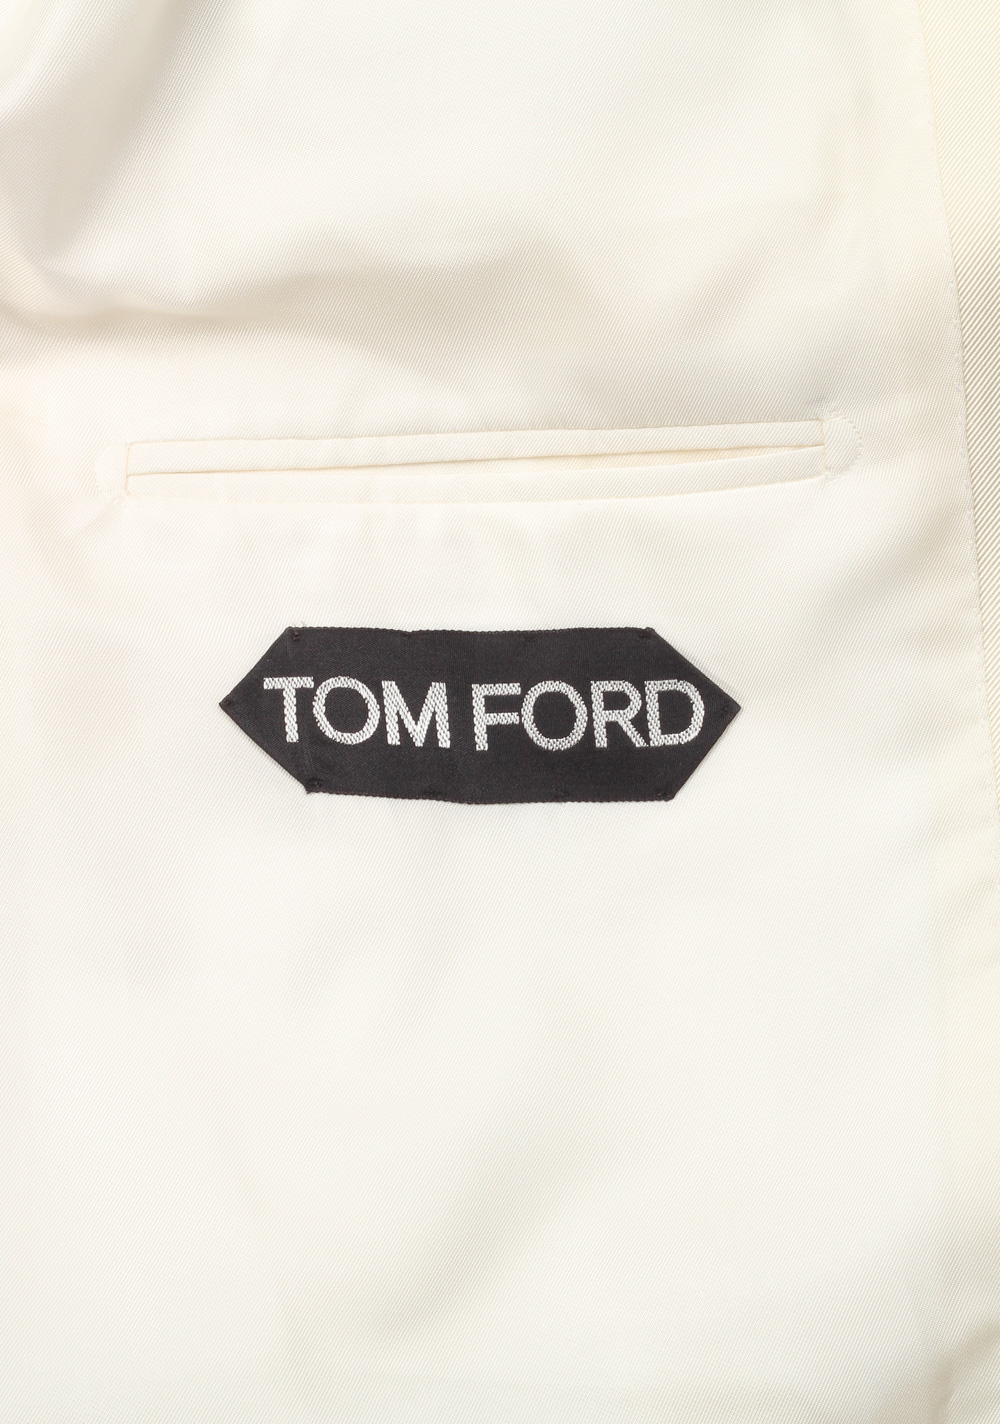 TOM FORD O’Connor Ivory Sport Coat Tuxedo Dinner Jacket | Costume Limité